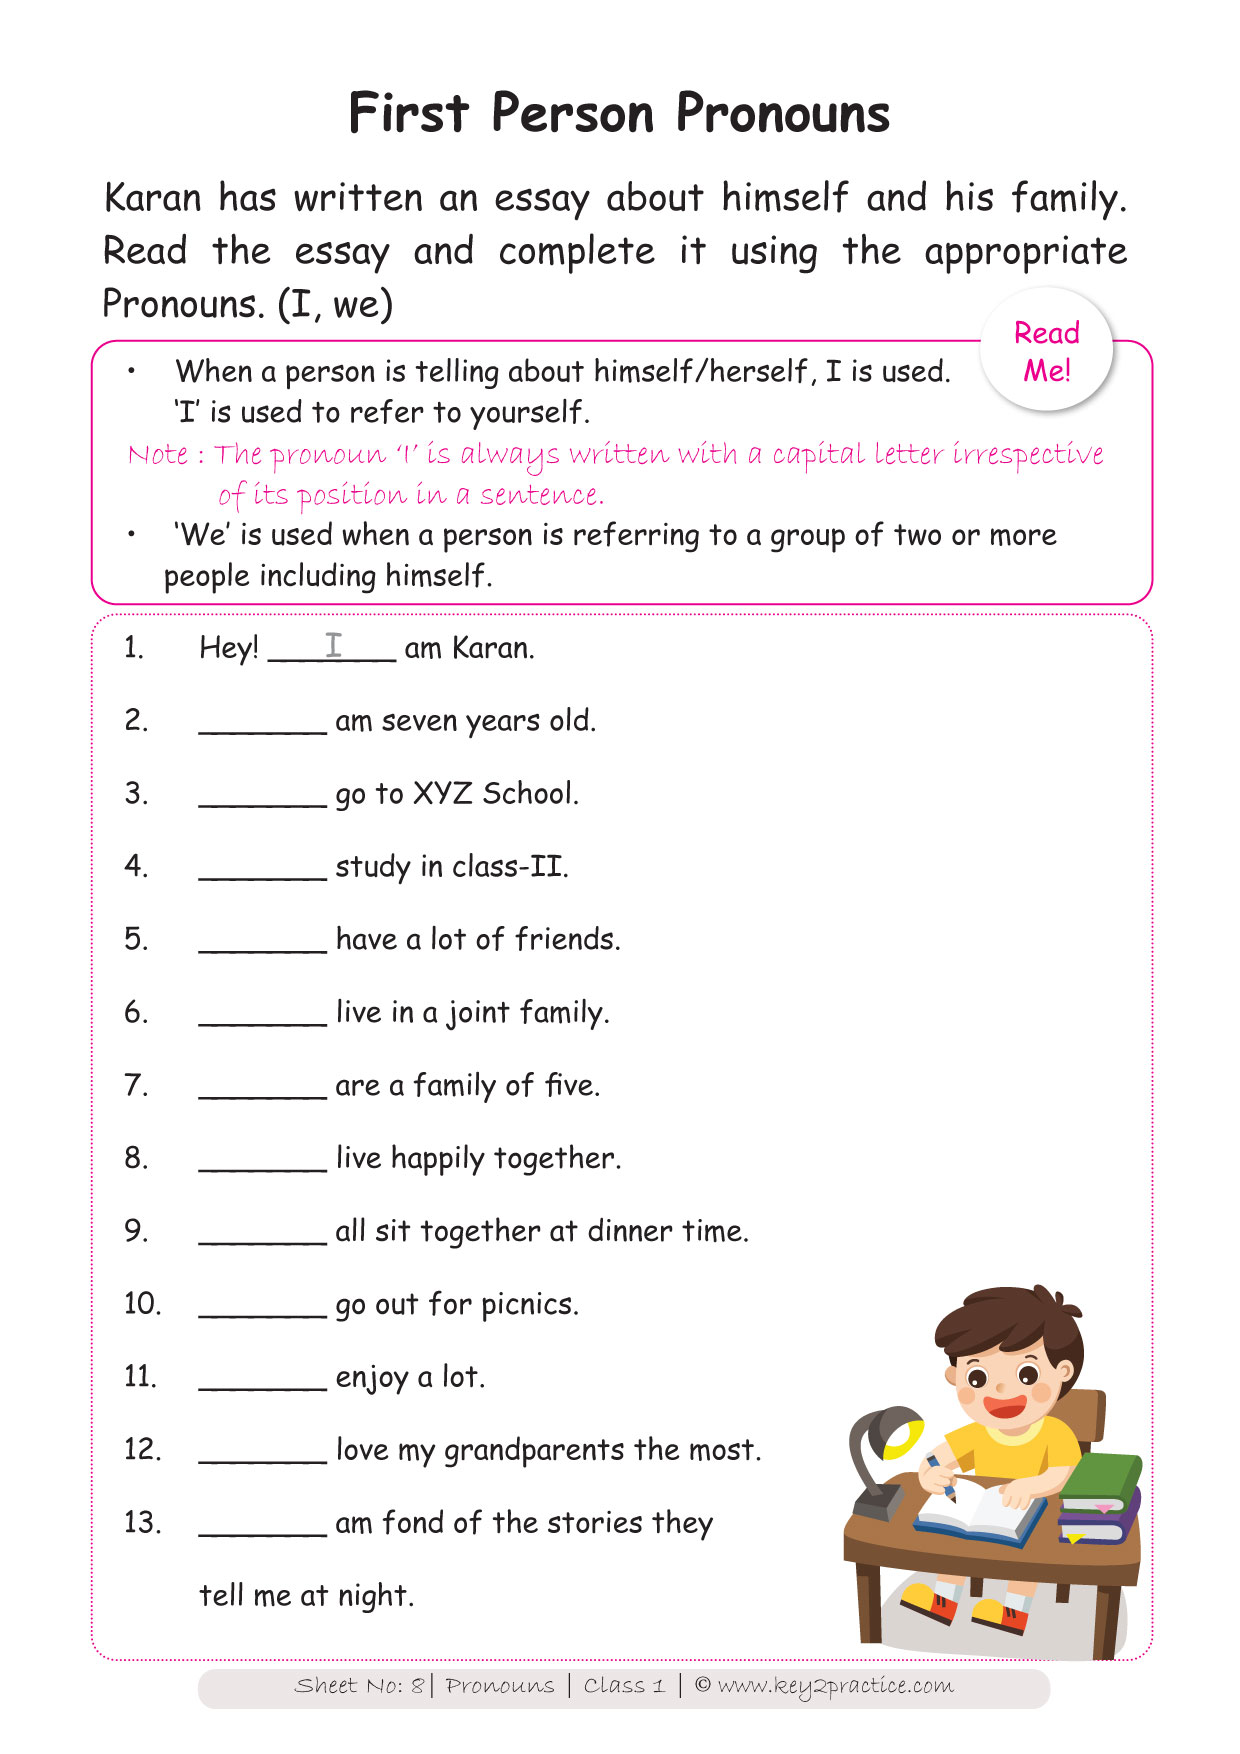 grammar-basics-subject-pronouns-worksheets-99worksheets